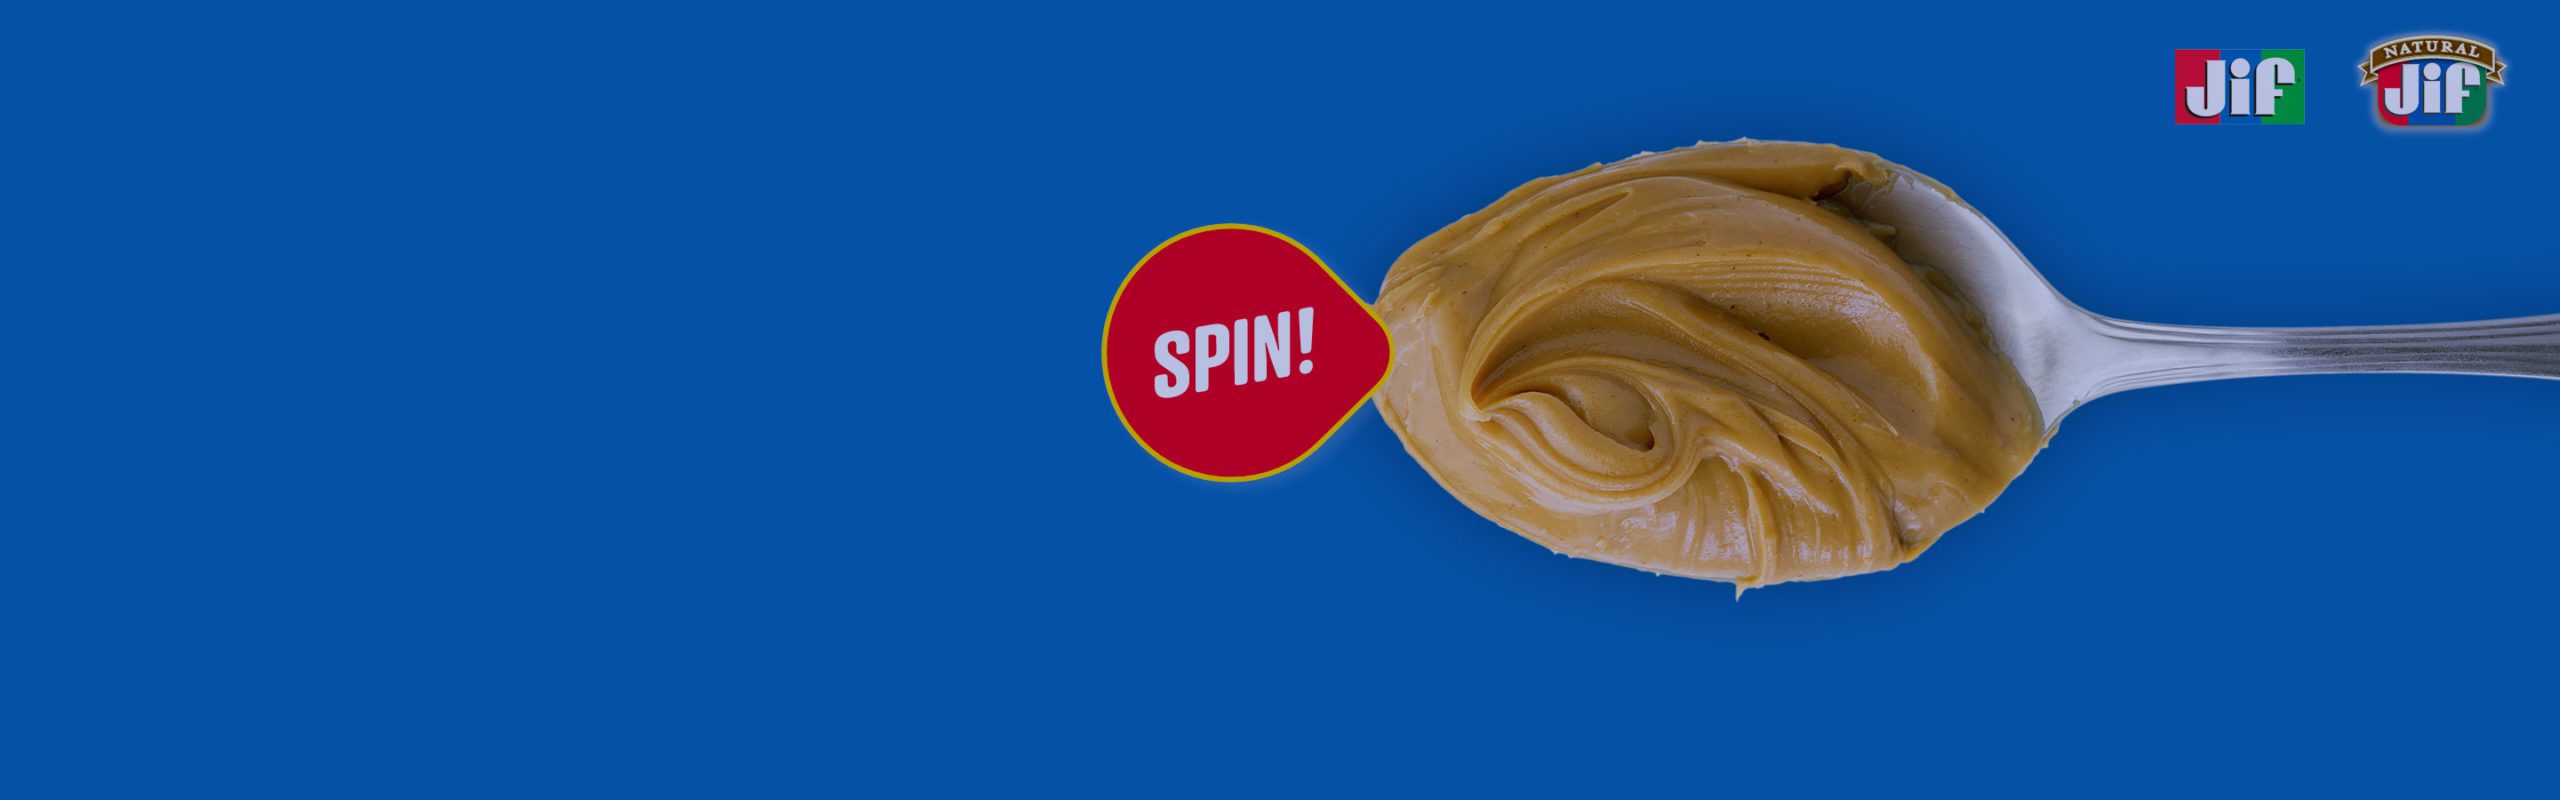 Jif peanut butter image